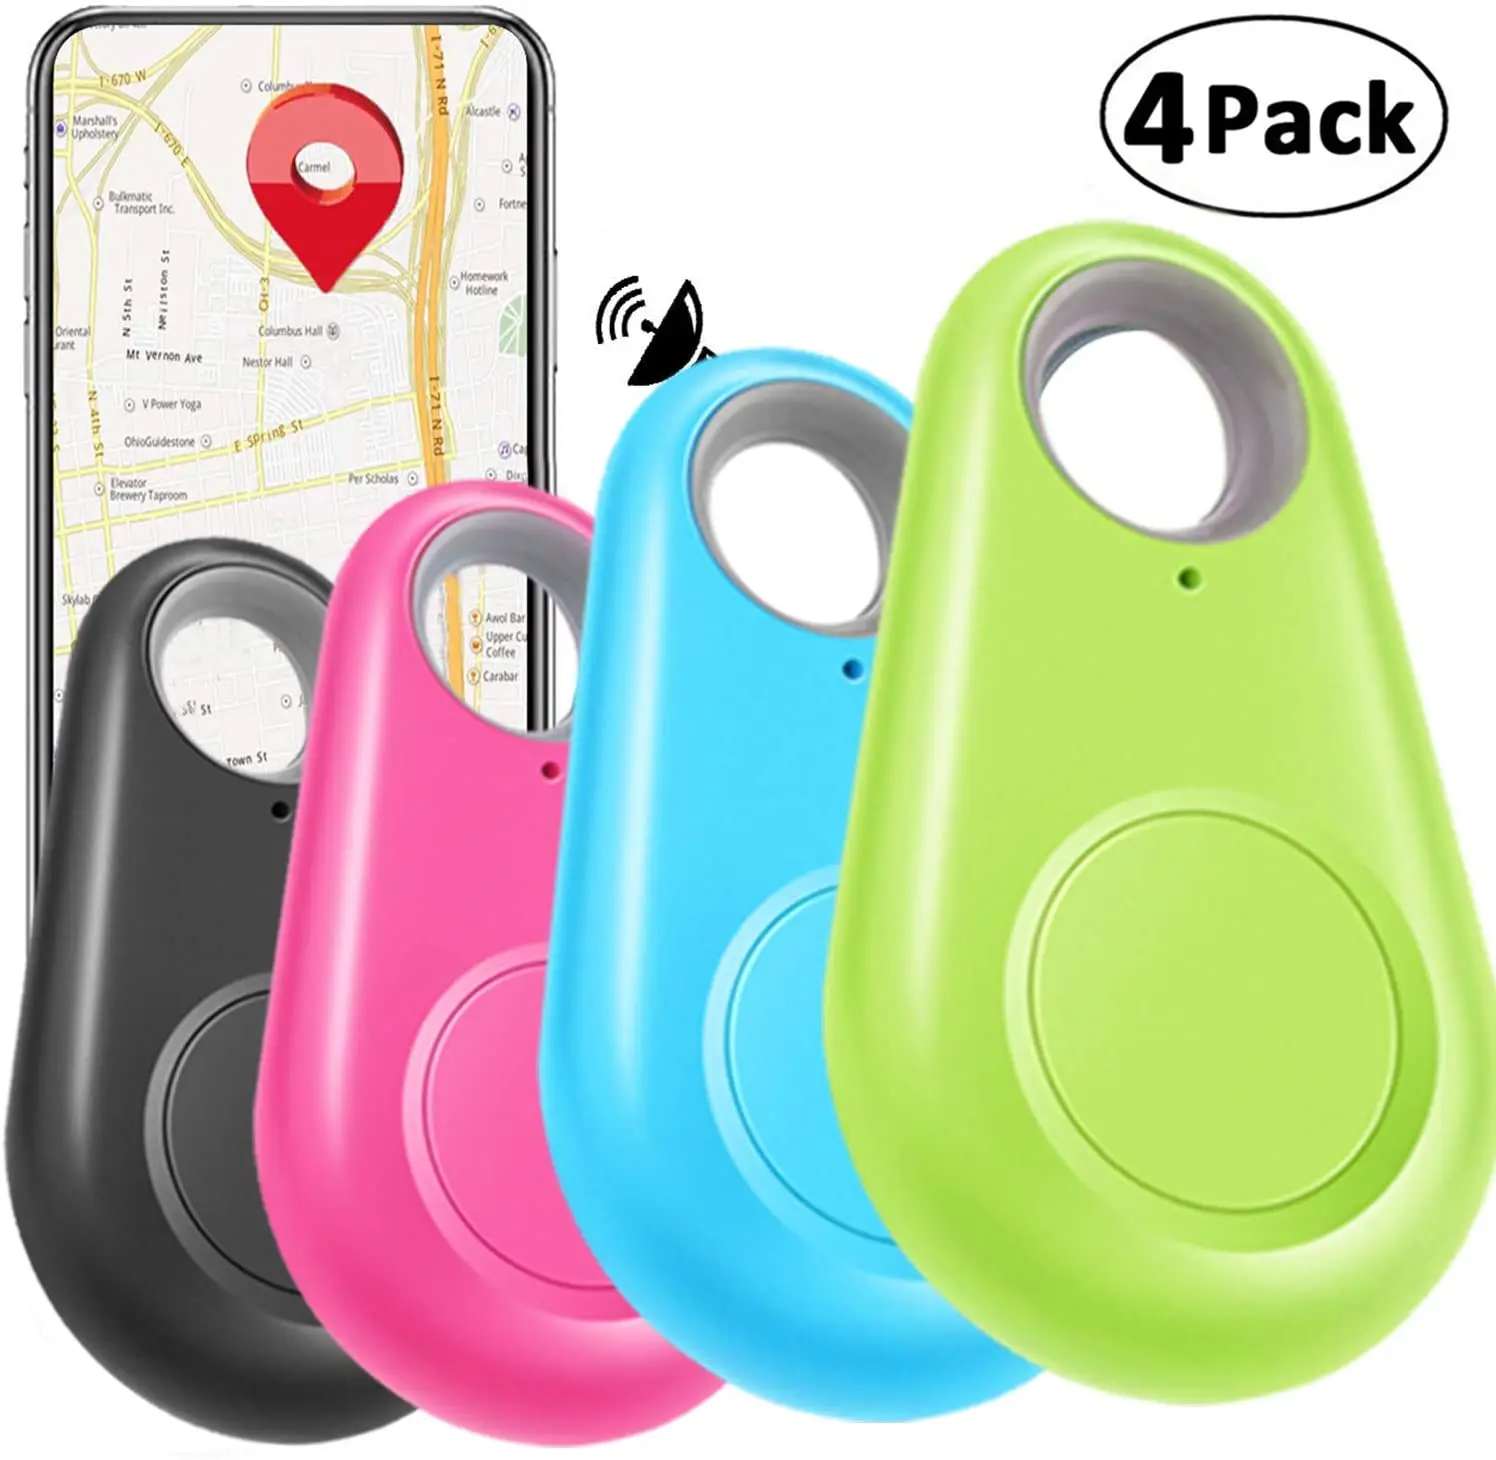 Rastreador GPS inteligente para coche, localizador con alarma, cartera, perro, niño, dispositivo de seguimiento antipérdida antirrobo, paquete de 4 unidades